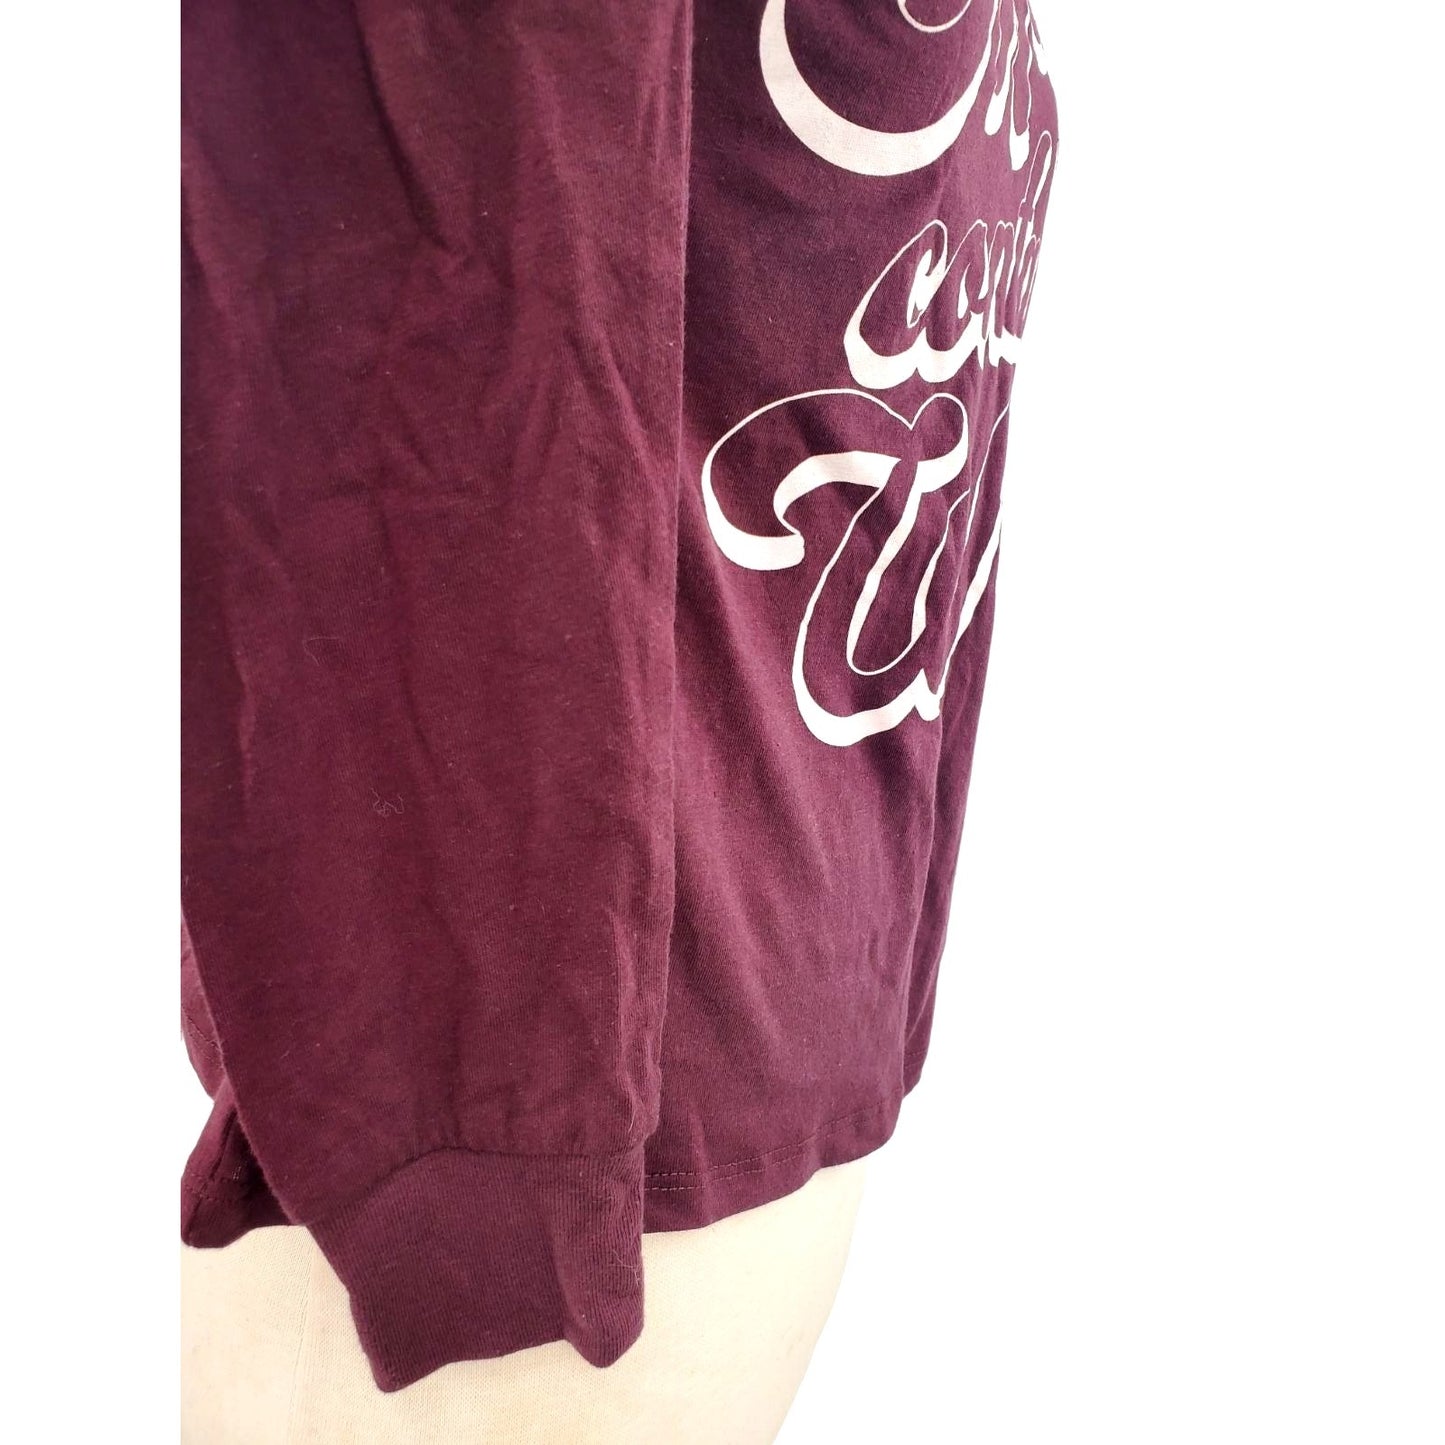 MAY CONTAIN WINE Zoe+Liv Lightweight top Long-Sleeve T-shirt